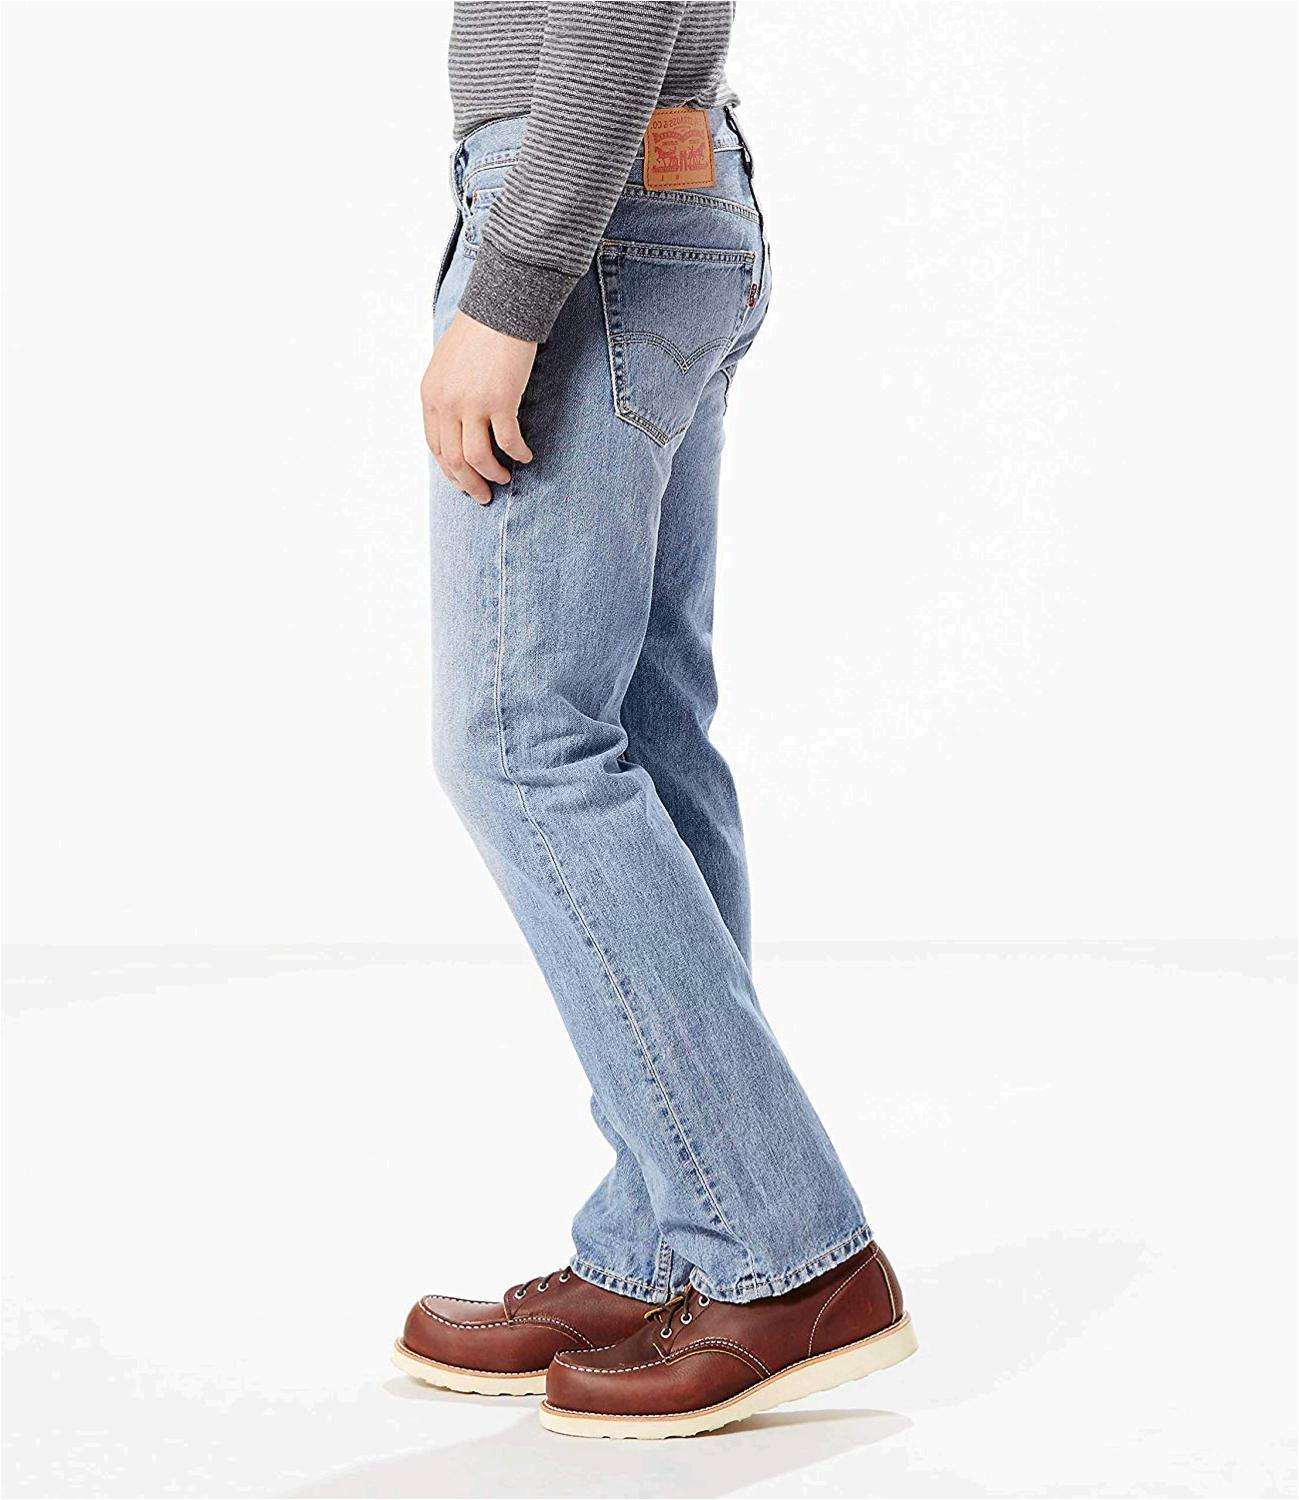 Levi's Men's 505 Regular Fit Jean, Kalsomine, 32x32, Kalsomine, Size ...